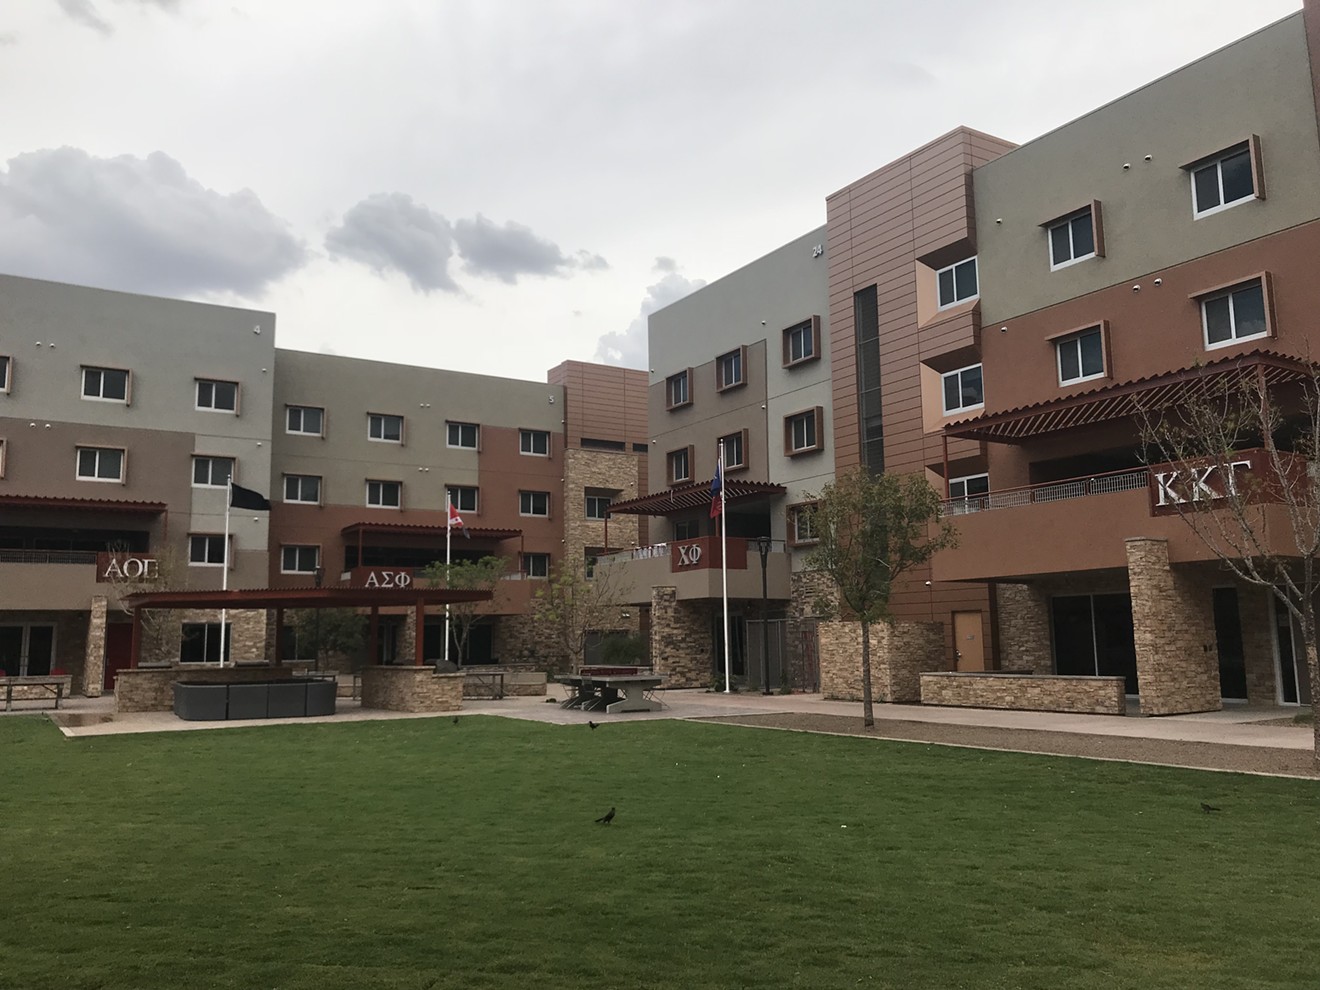 The Greek Leadership Village's courtyard on Arizona State University's main campus.